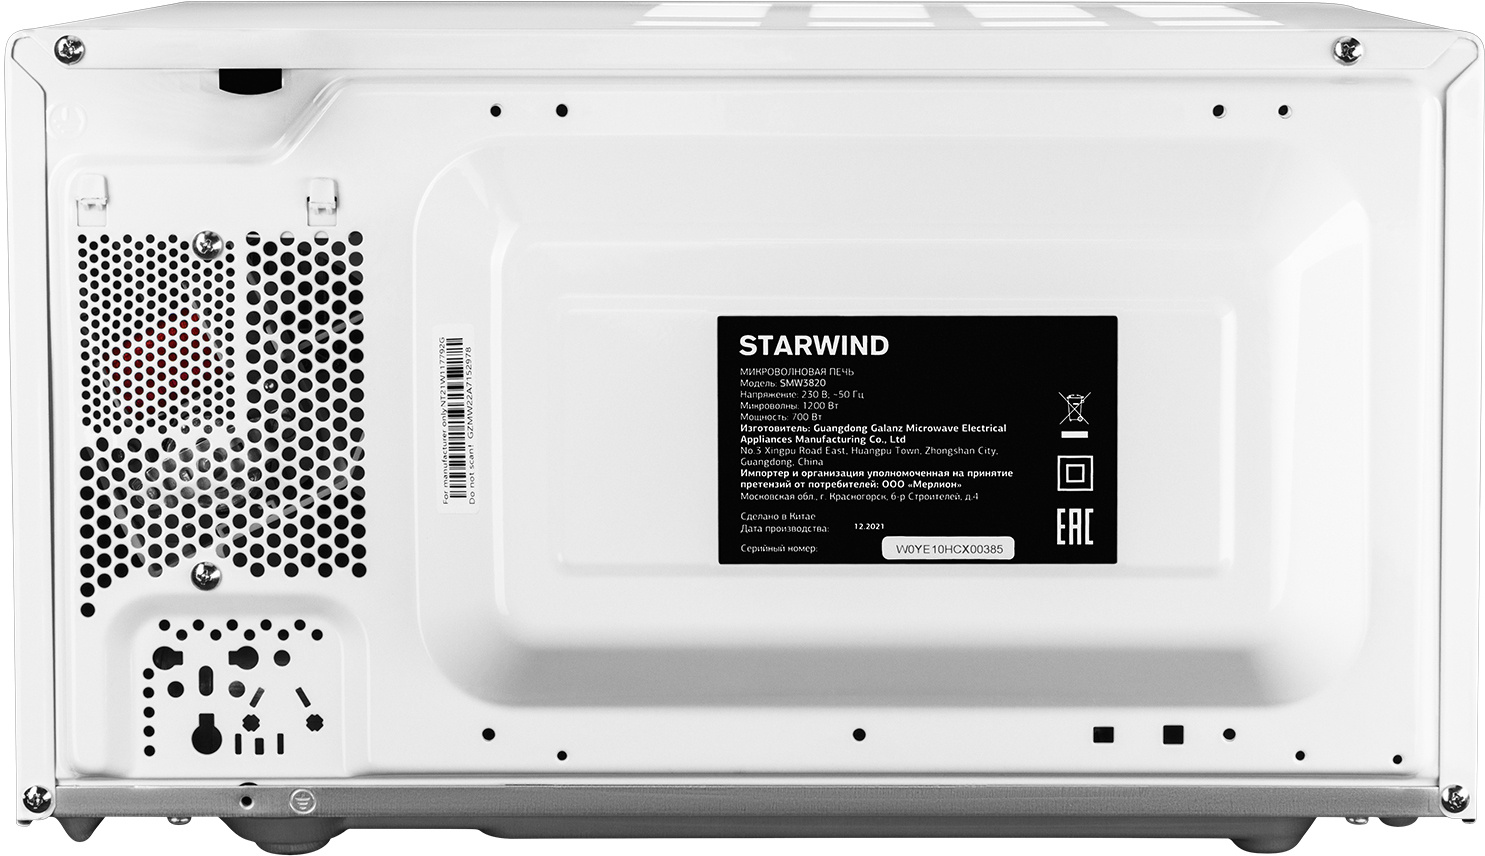 Микроволновая печь Starwind SMW4020 белый от магазина Старвинд